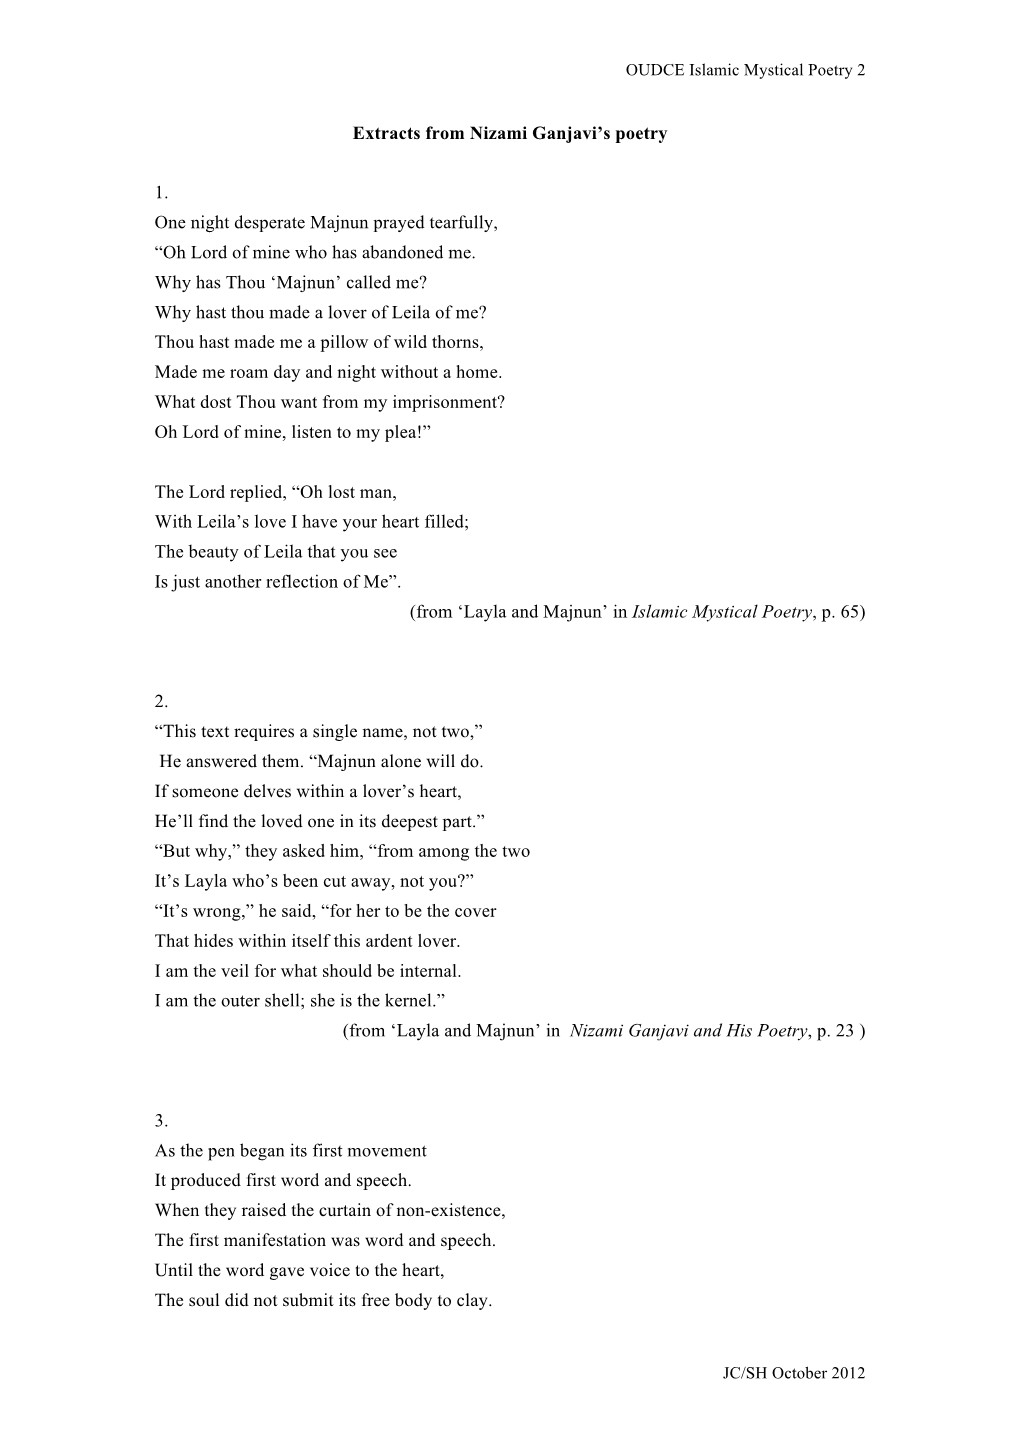 Extracts from Nizami Ganjavi's Poetry 1. One Night Desperate Majnun